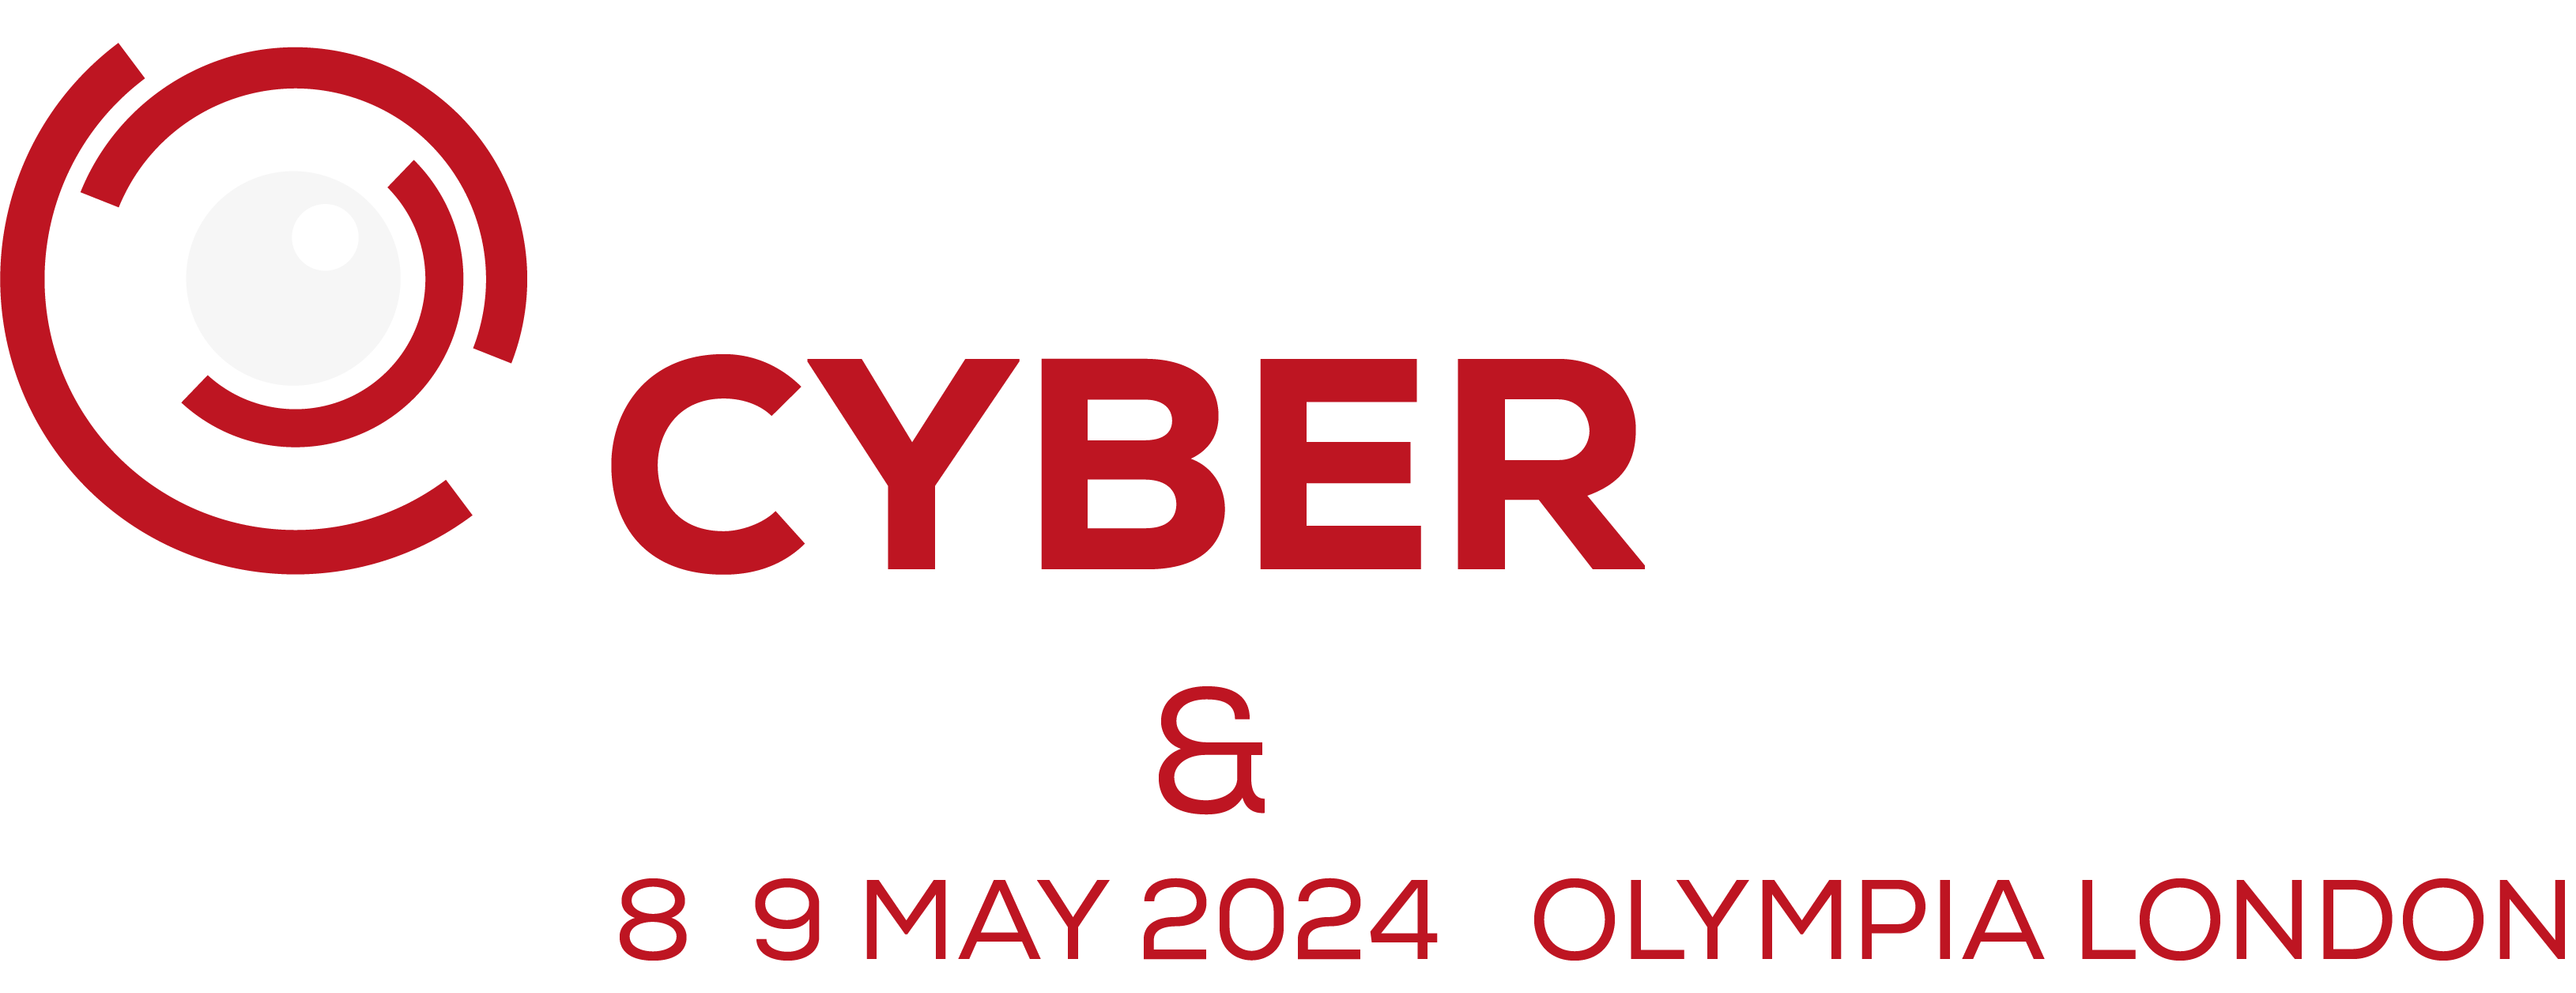 Agenda UK Cyber Week 2024